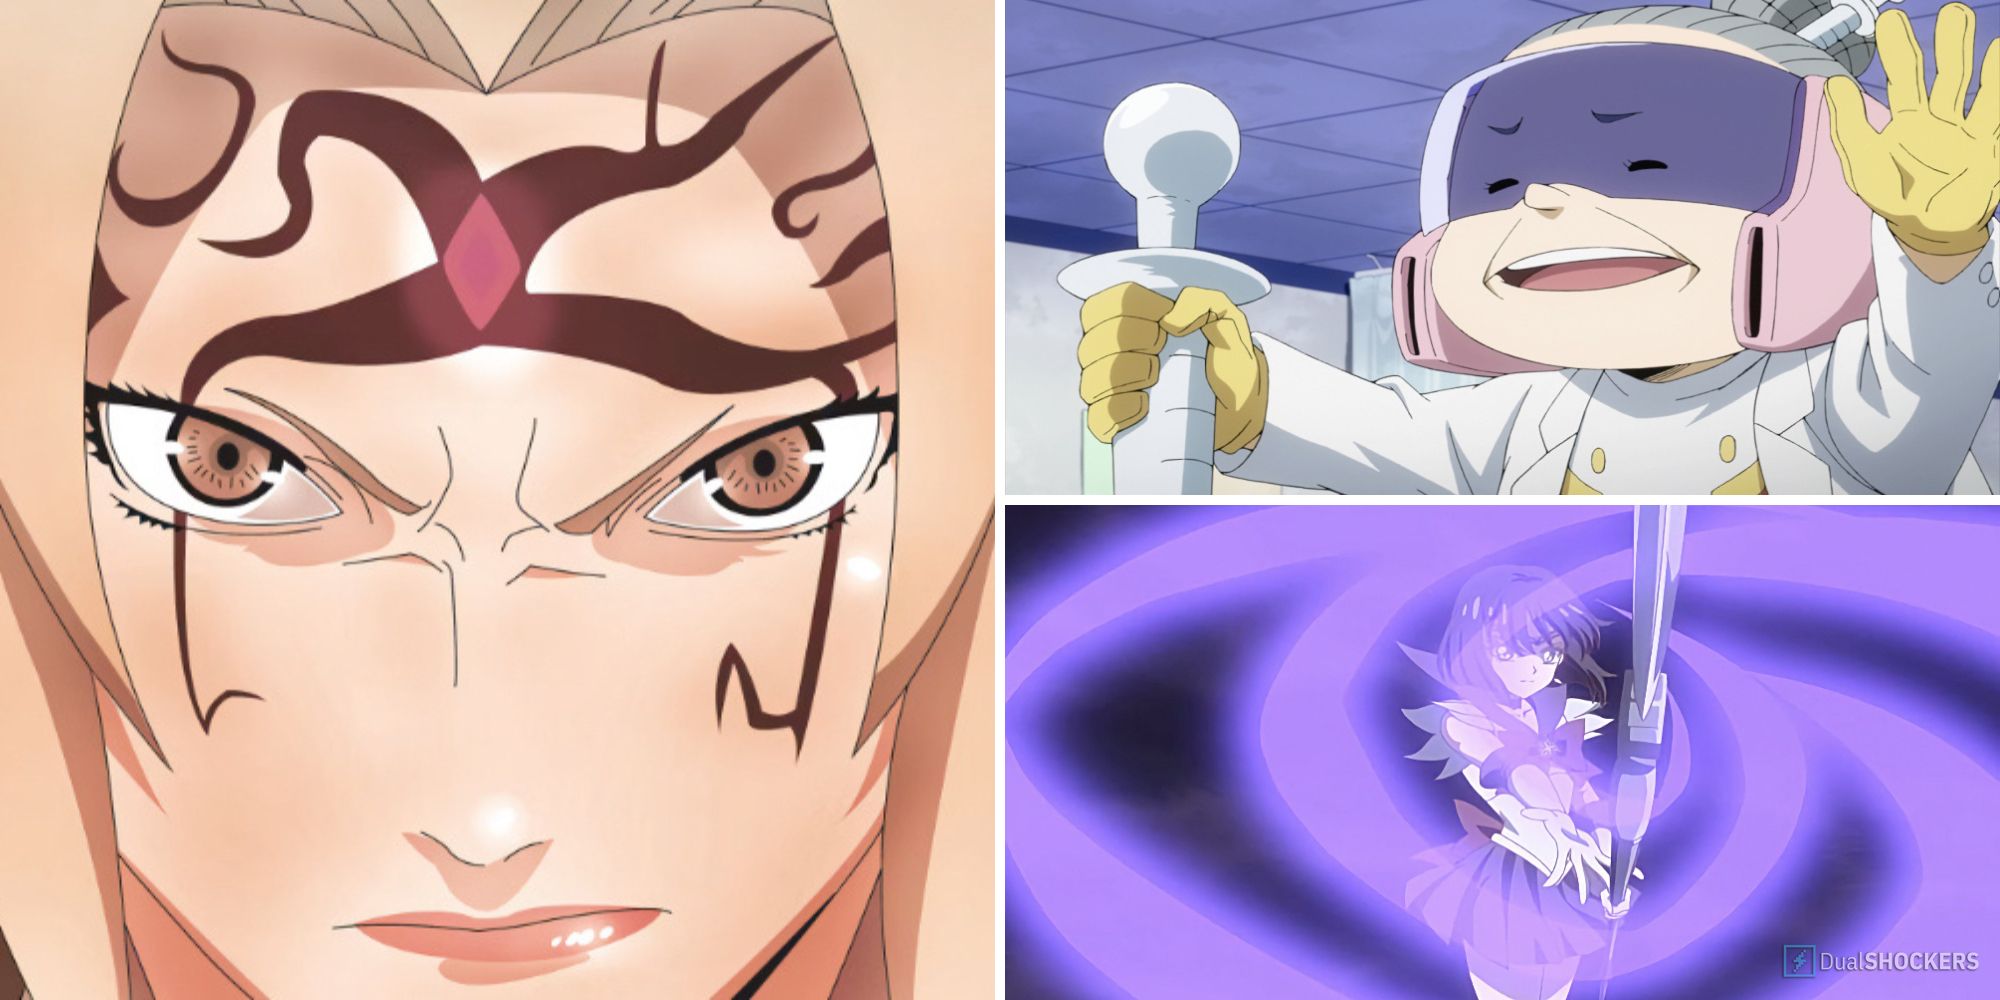 10 Best Healers In Anime, Ranked